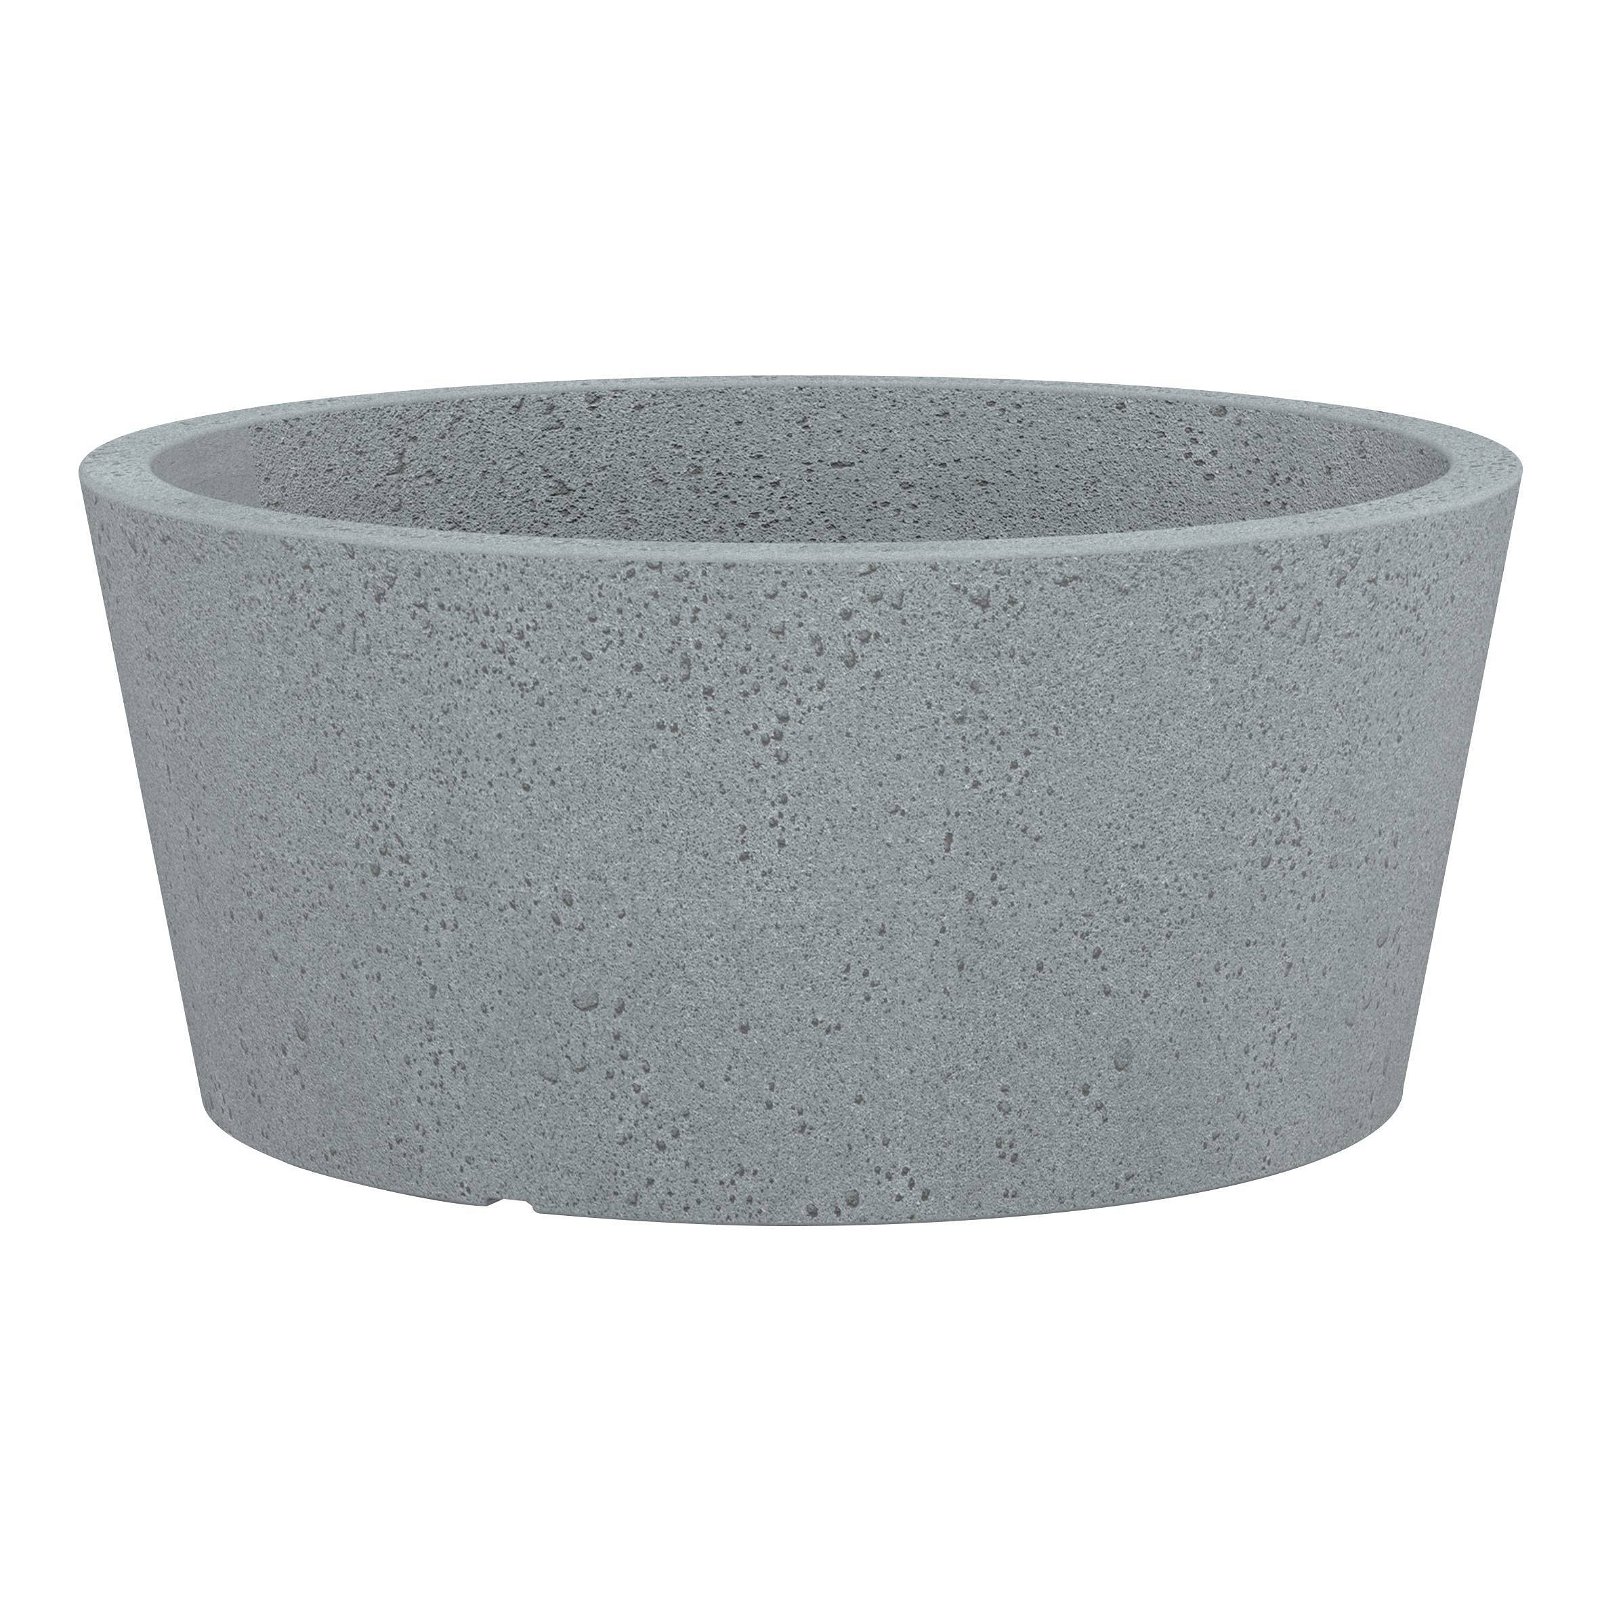 Pflanzgefäß 'C-Cone', stony grey, Ø 39 x H 18 cm, 15 Liter